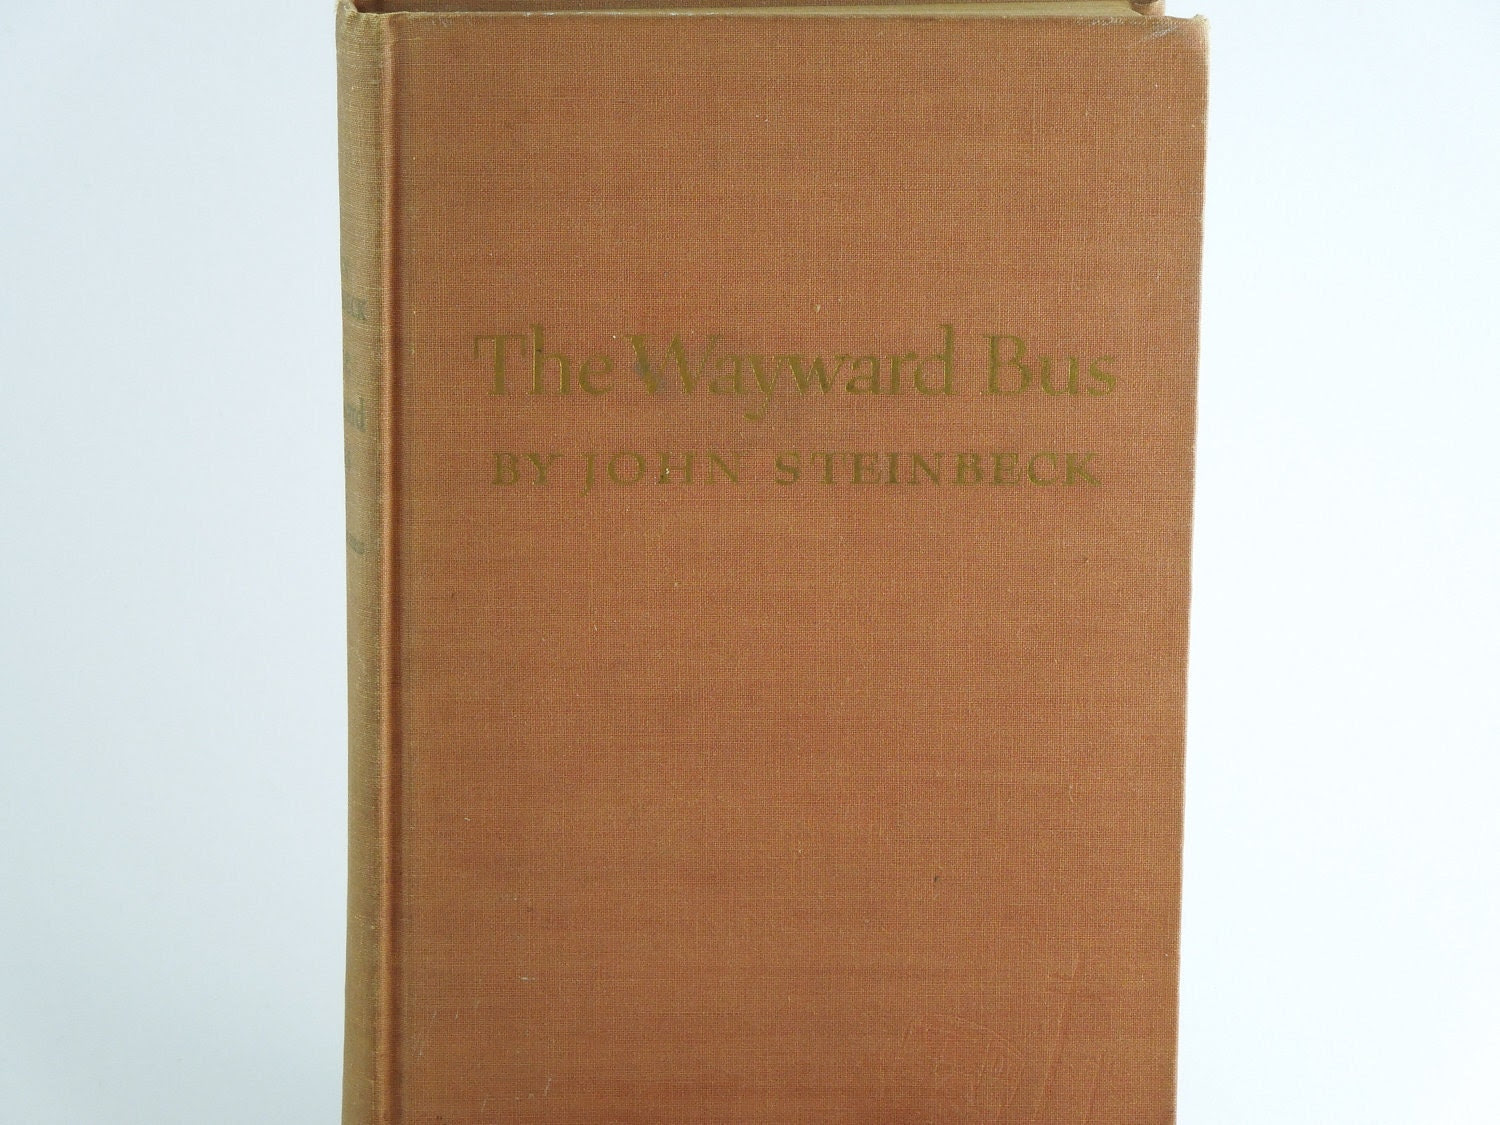 John Steinbeck "The Wayward Bus" VintageHardback Book-1st Edition Hardback-Father's Day Gift-Rare book - Moonlightdecorator